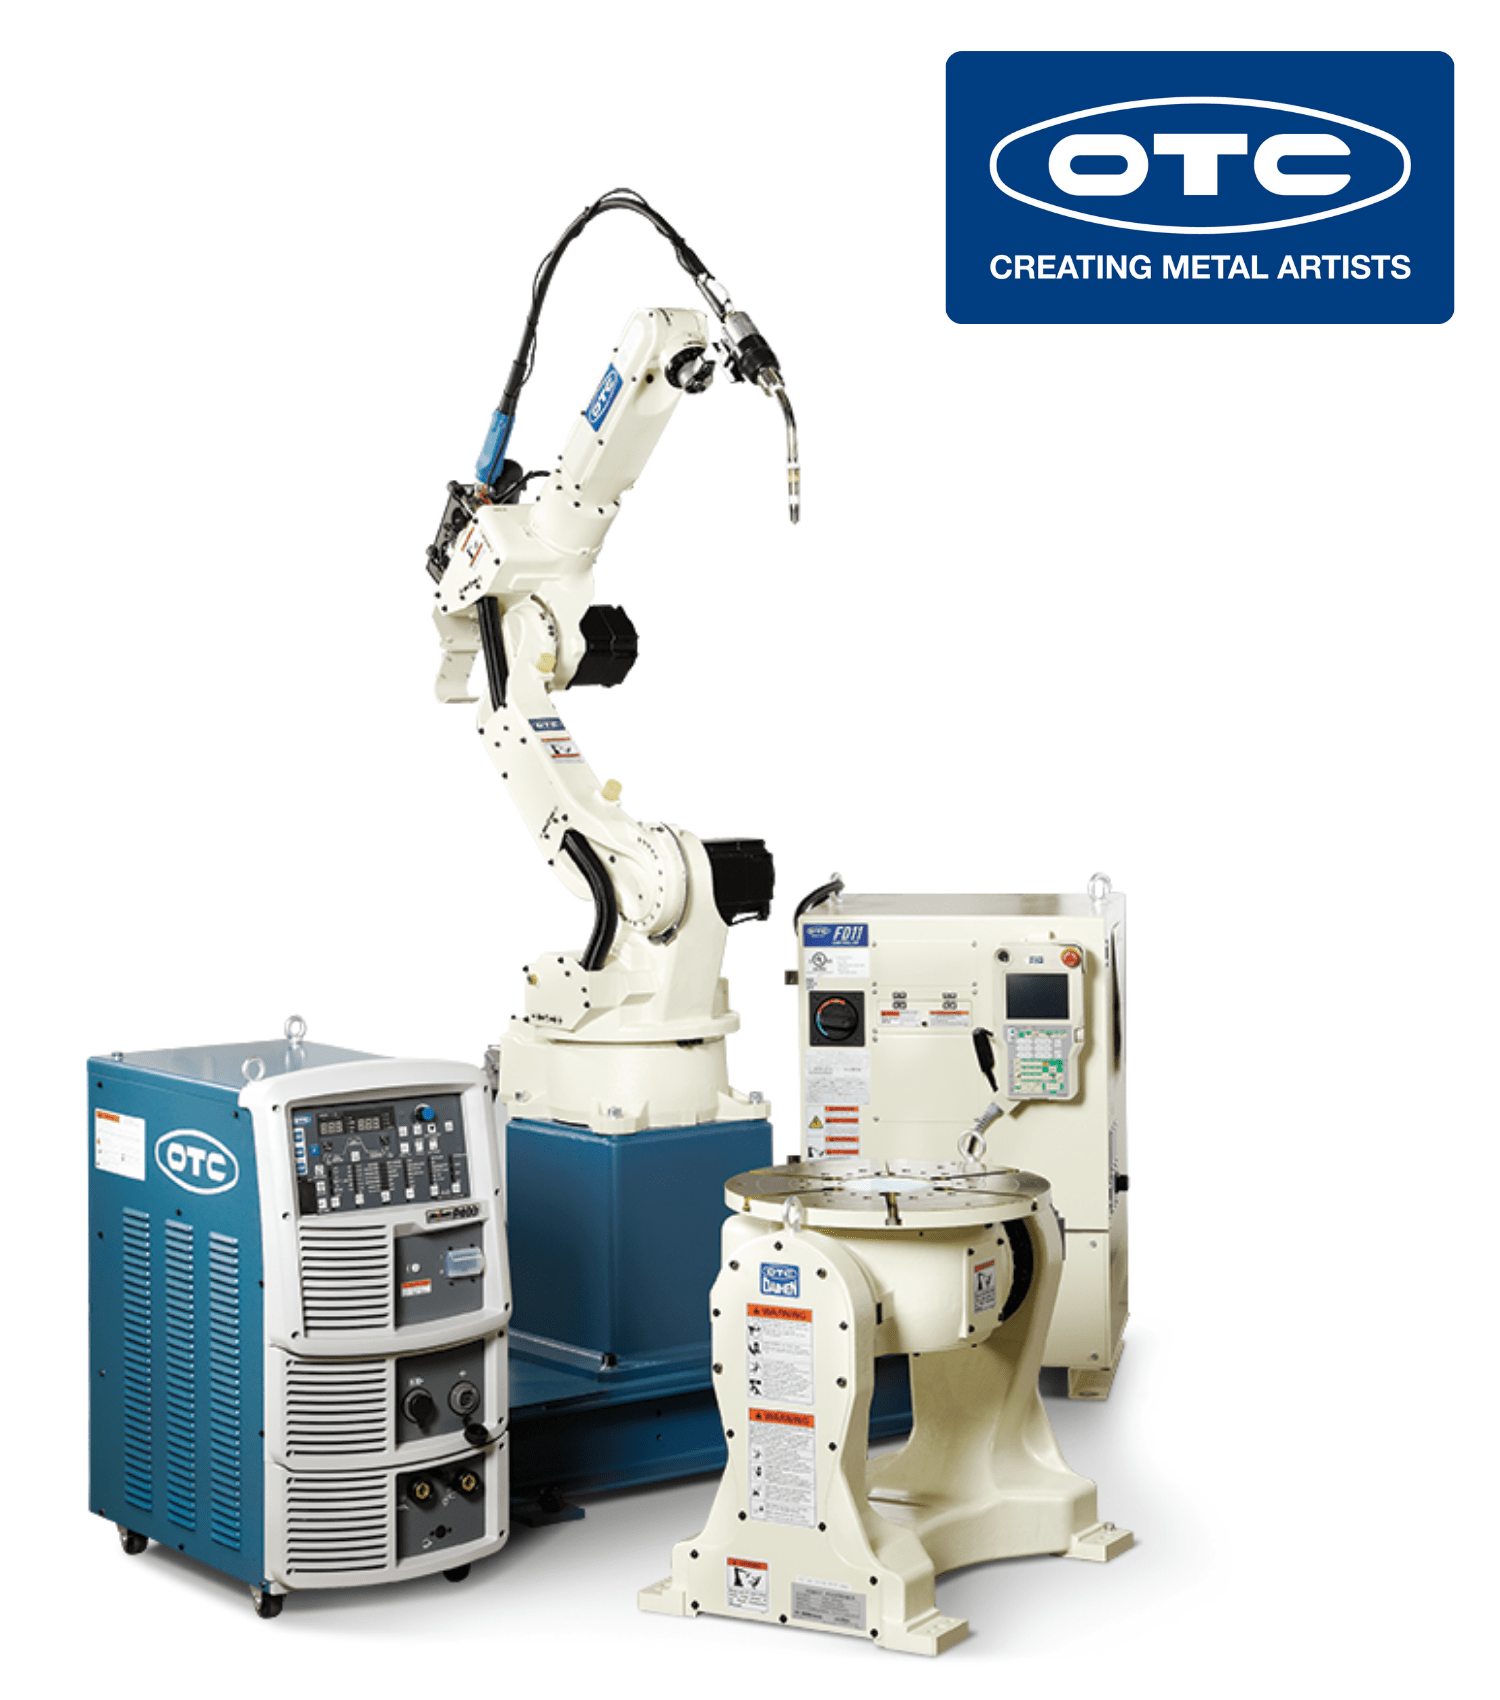 OTC Daihen Robot Welding Product Line Up